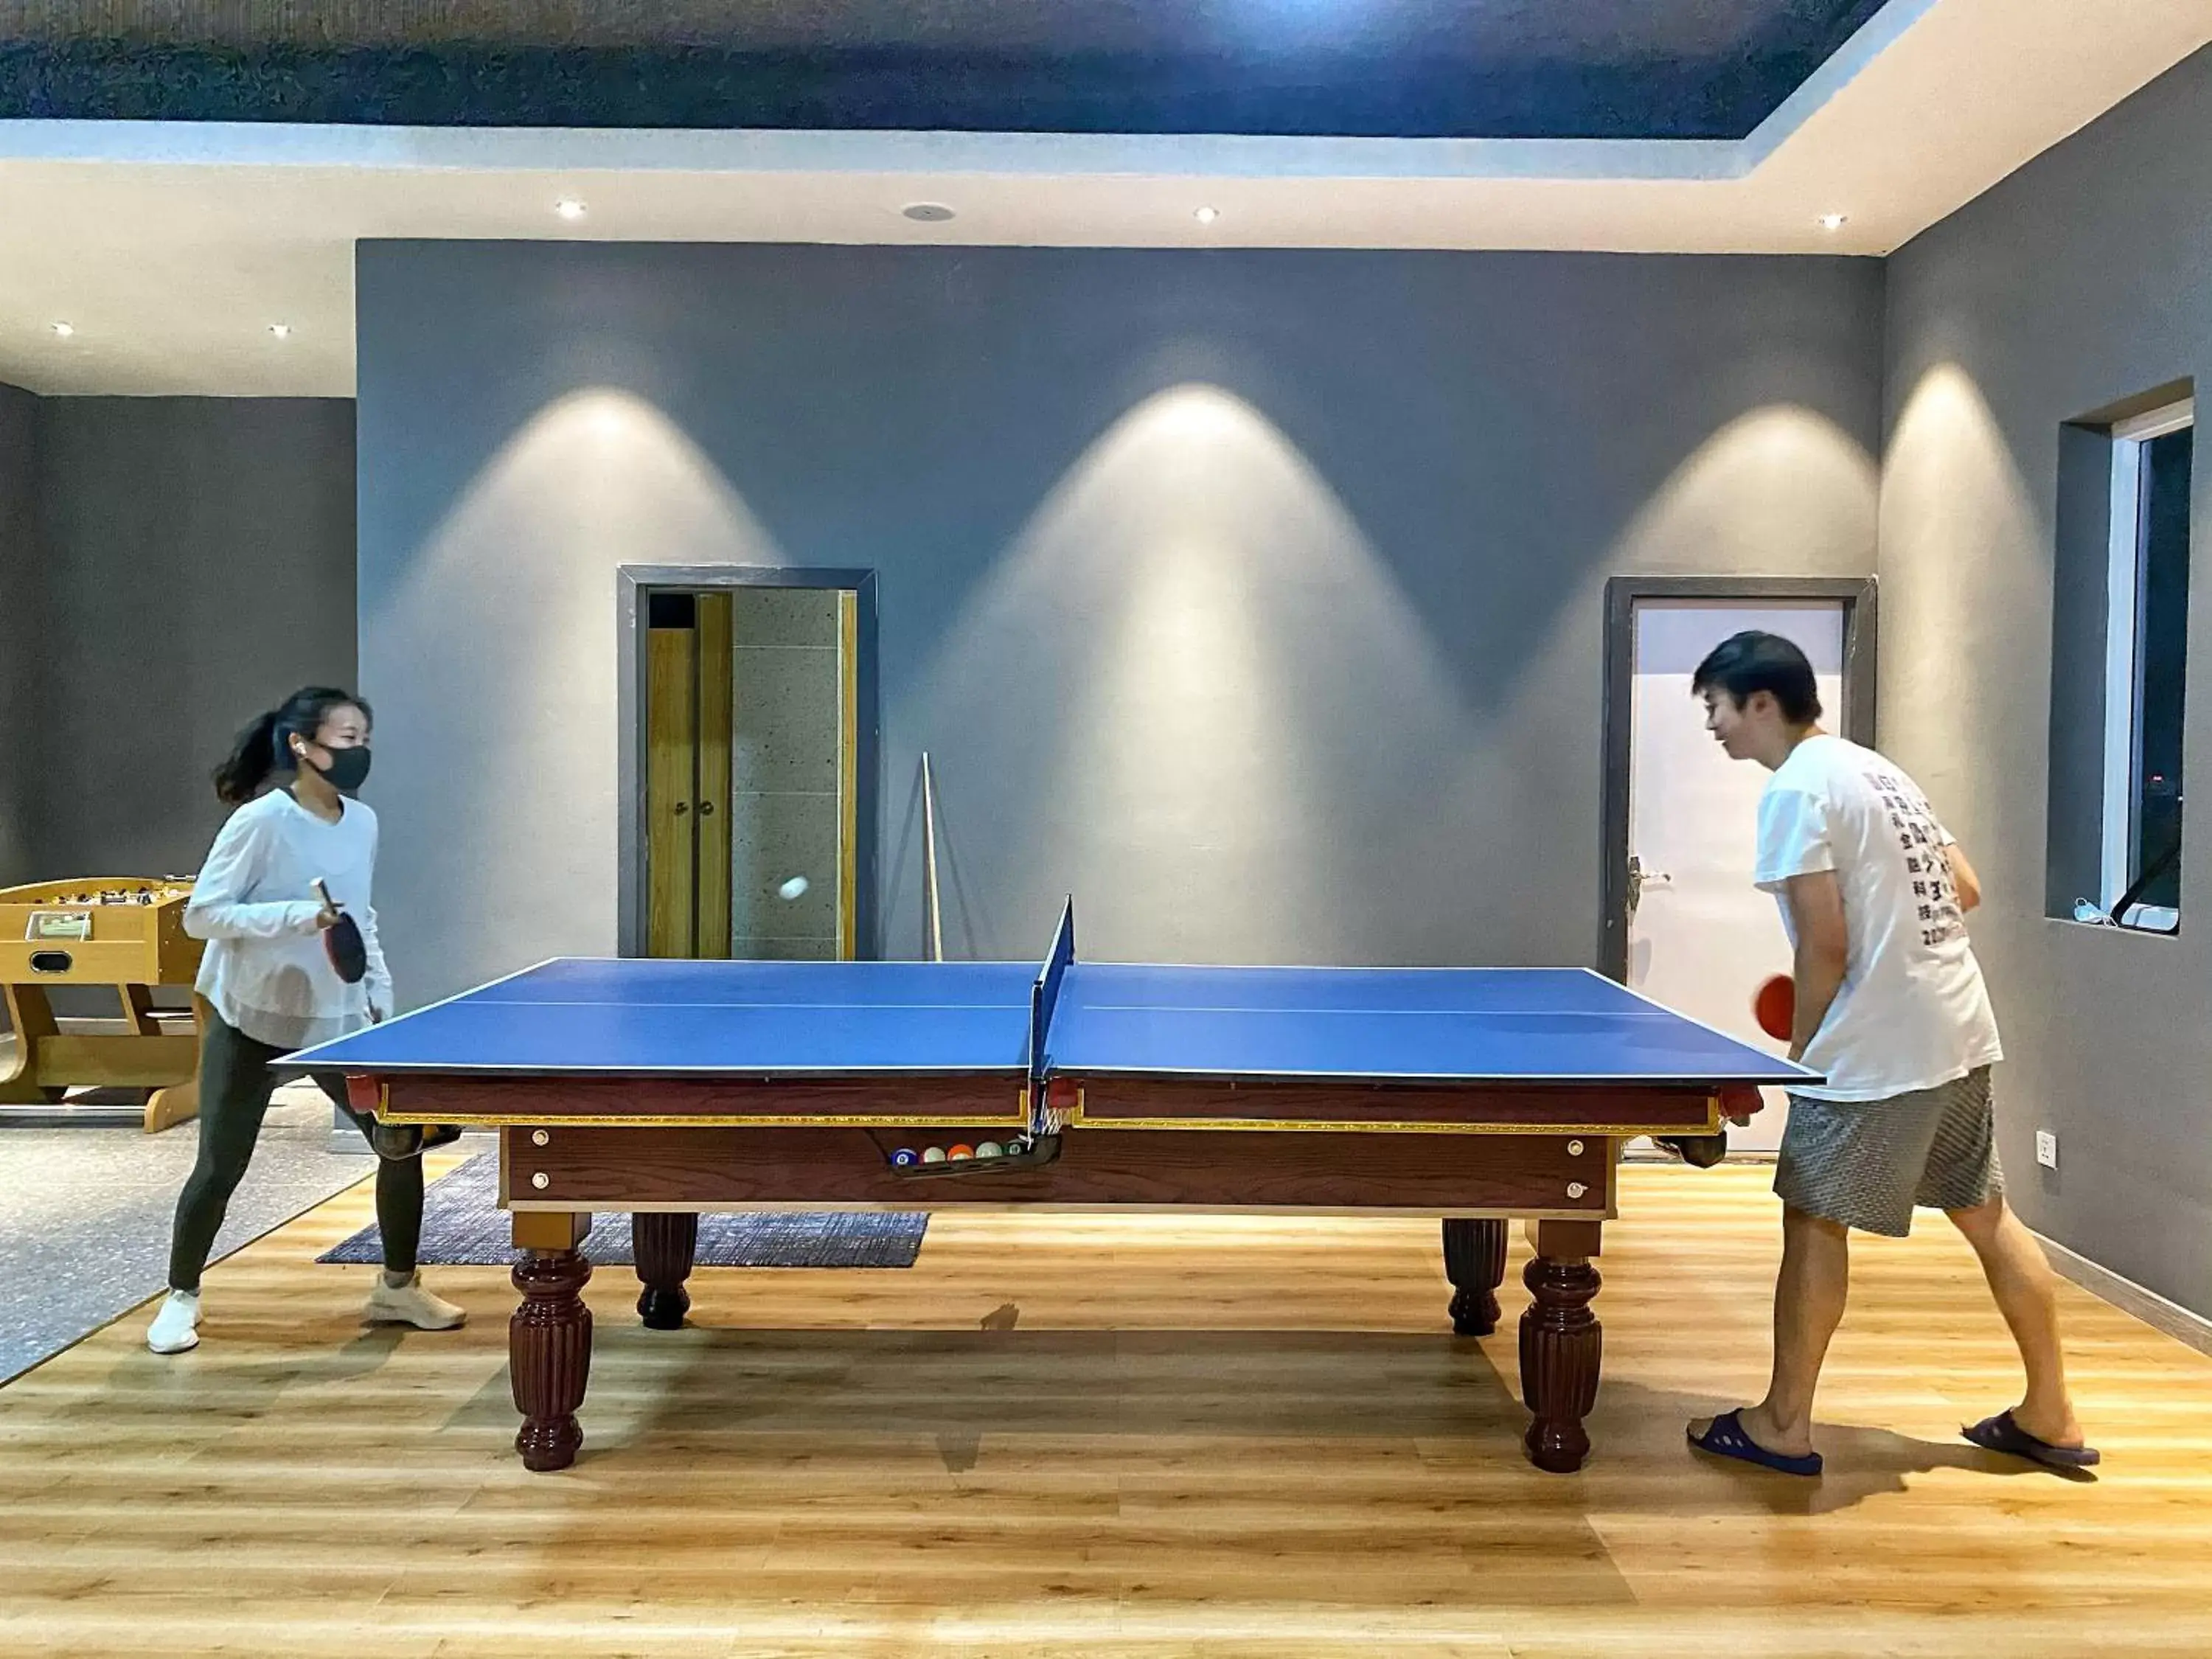 Game Room, Billiards in Yunfan Hotel